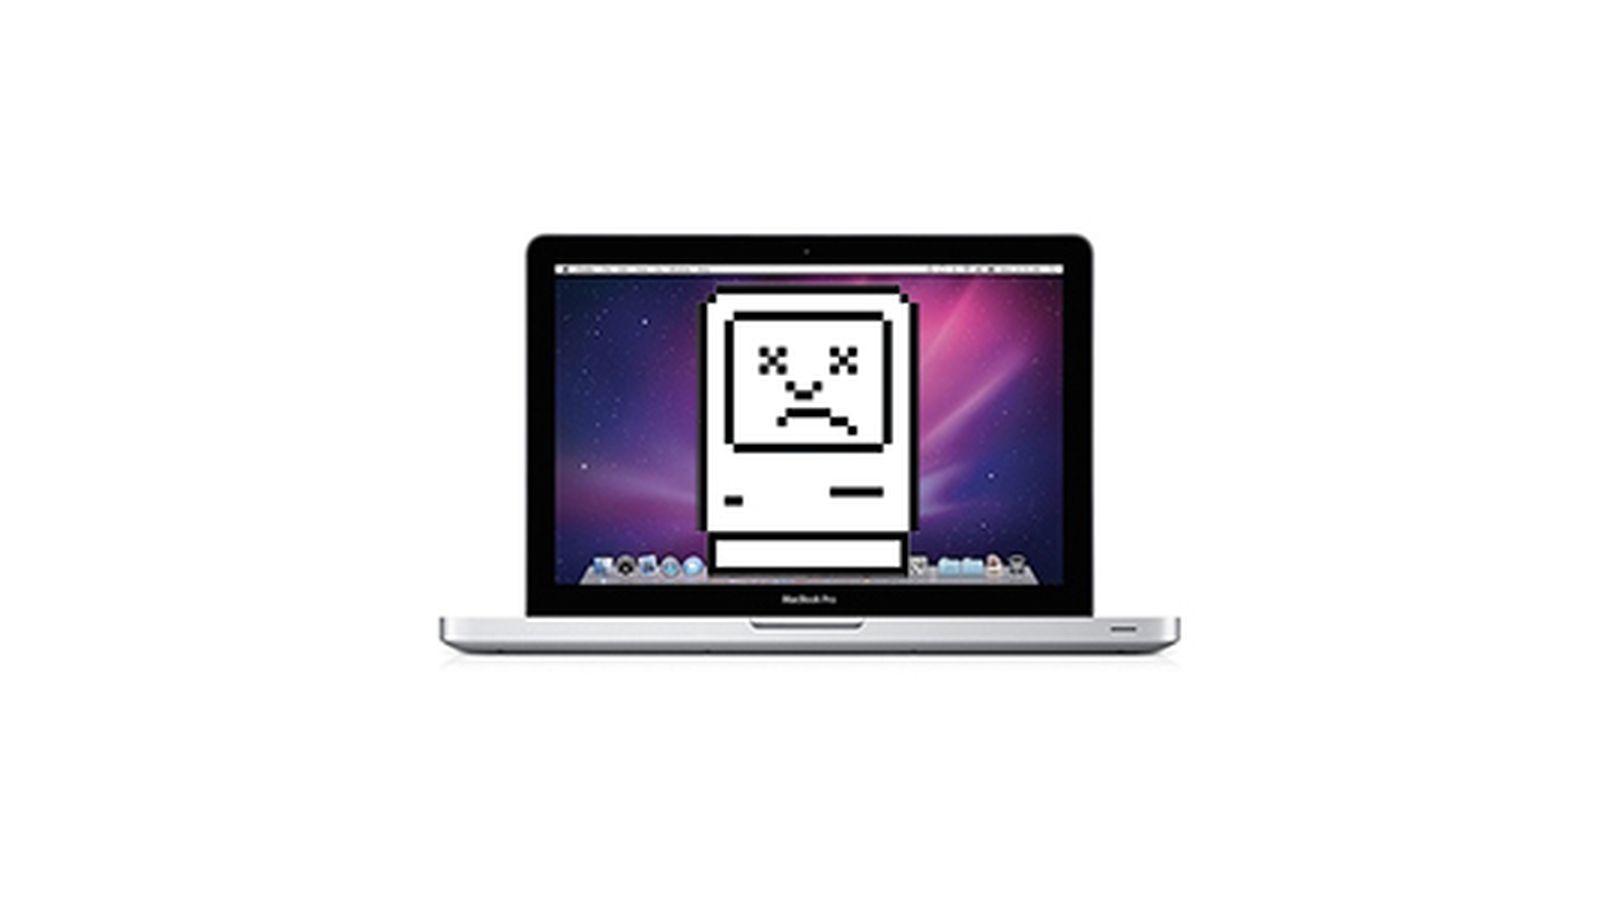 macbook pro software update yosemite